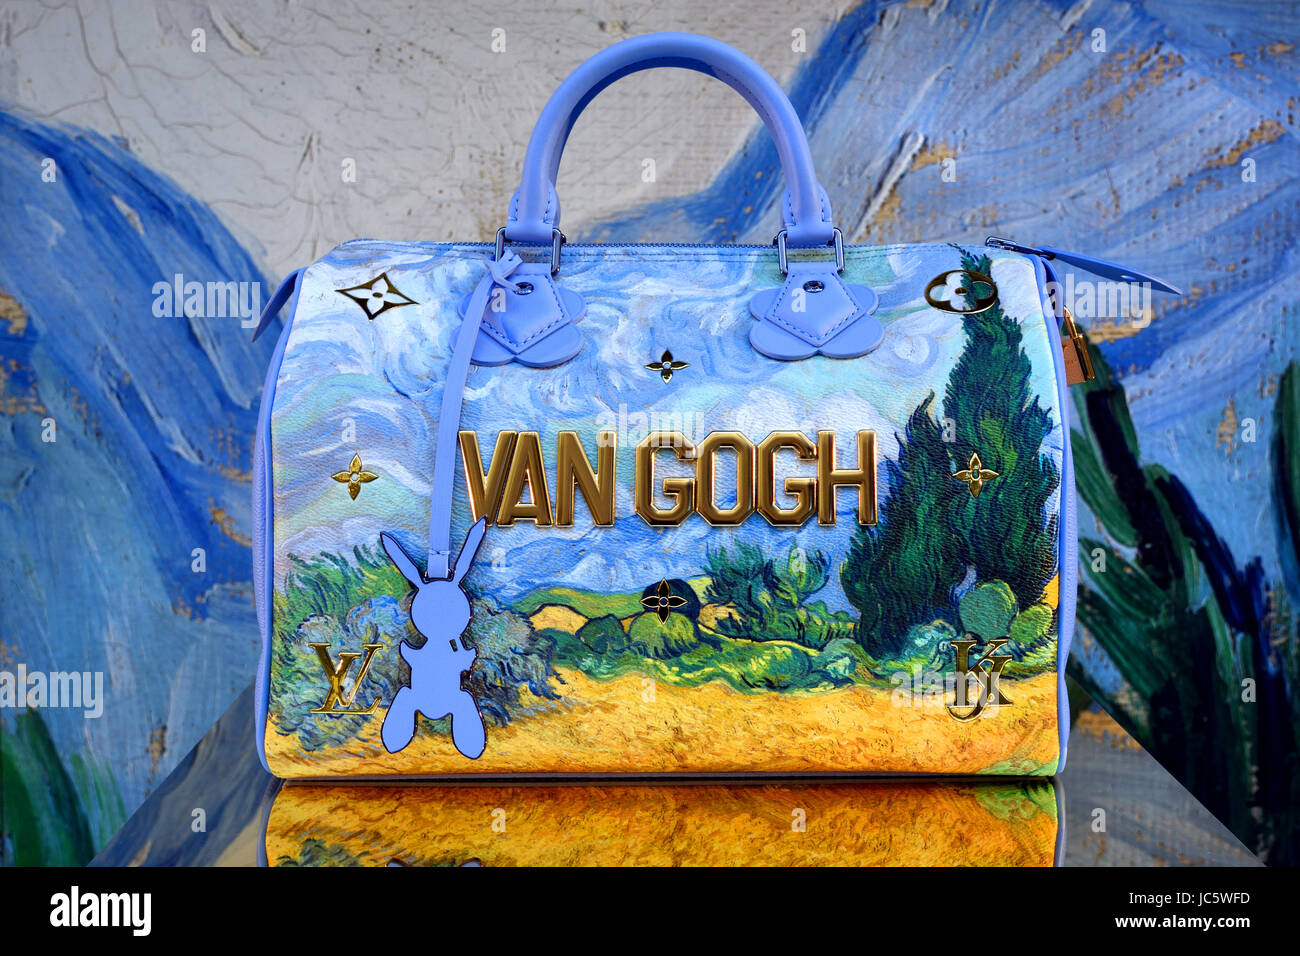 LOUIS VUITTON Masters Speedy 30 Bag M43314 Van Gogh Jeff Koons Purse Auth  New